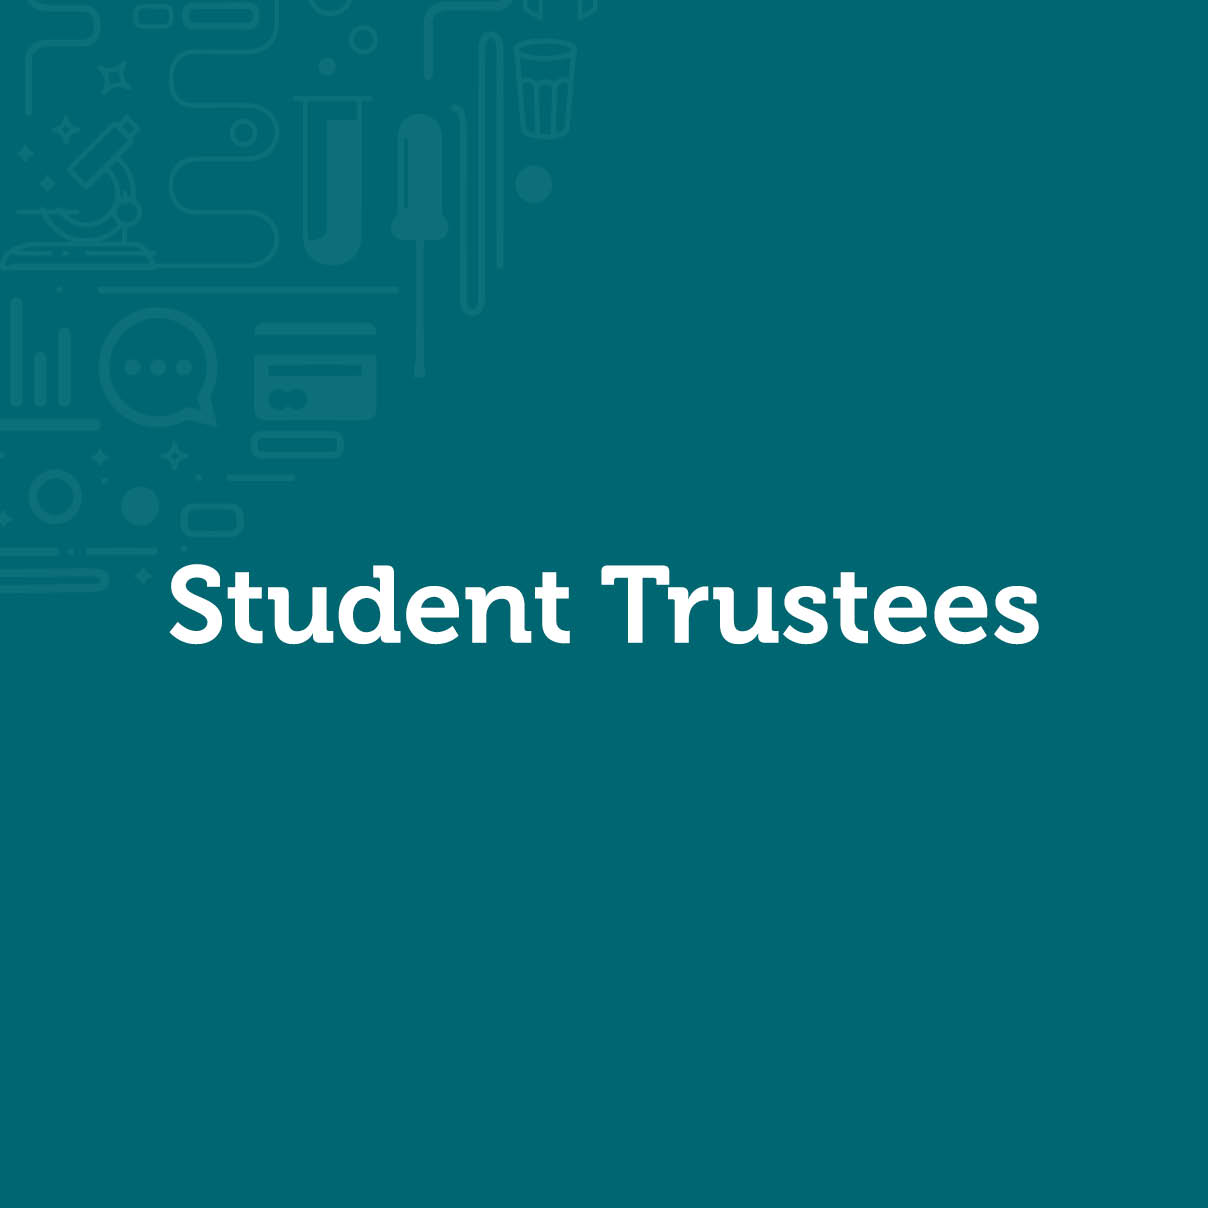 Student Trustees